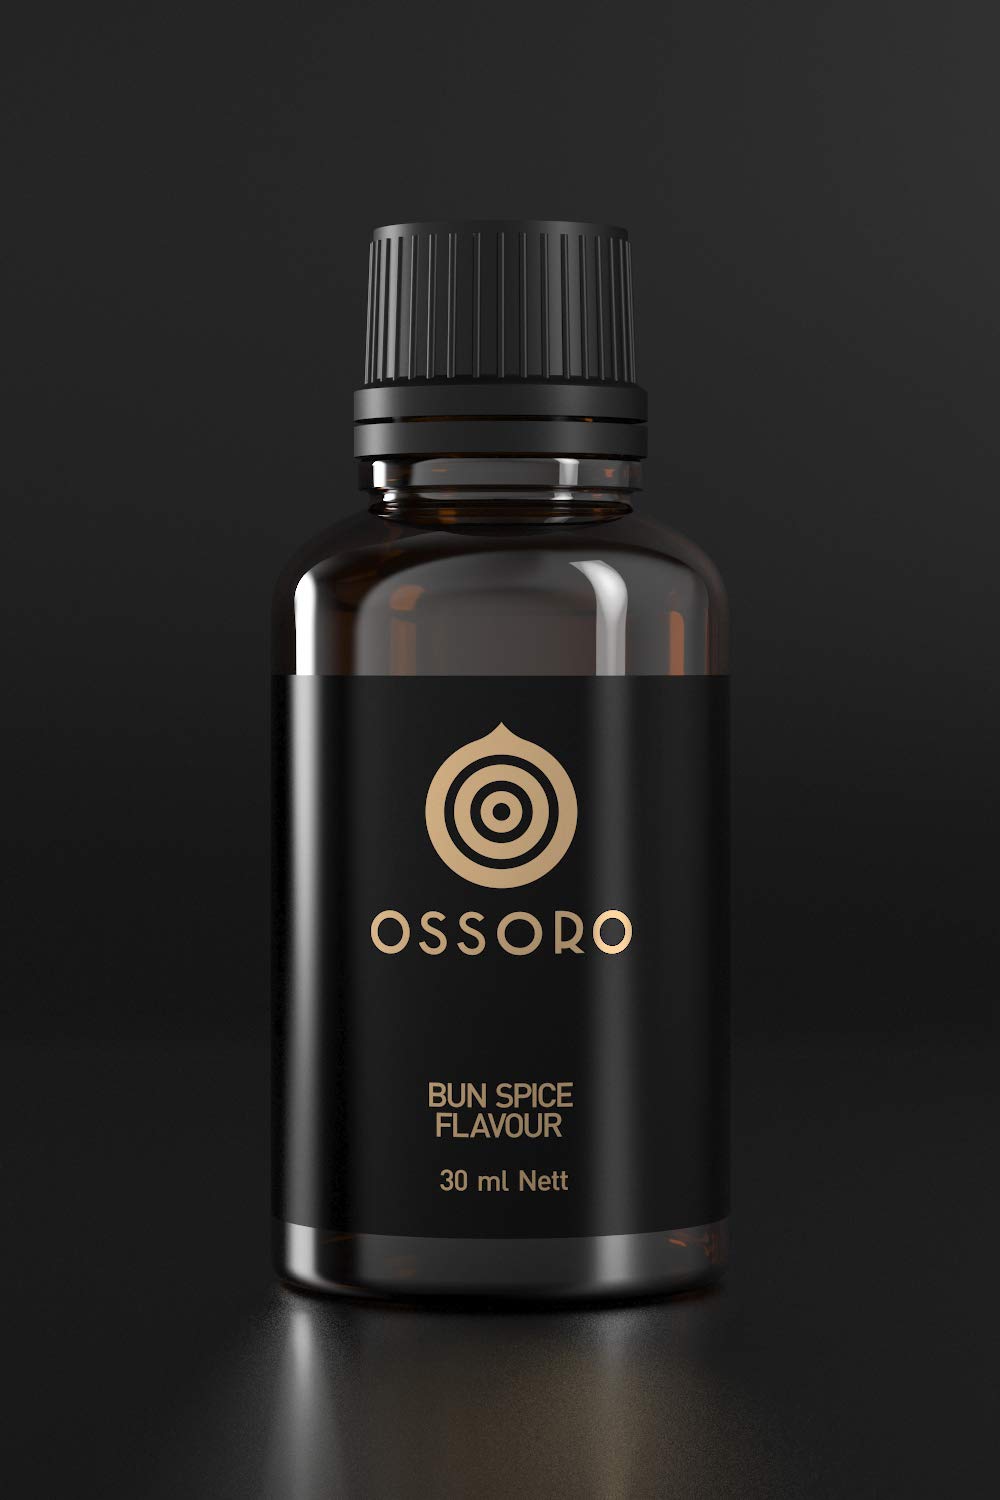 Ossoro Bun Spice Flavour Image